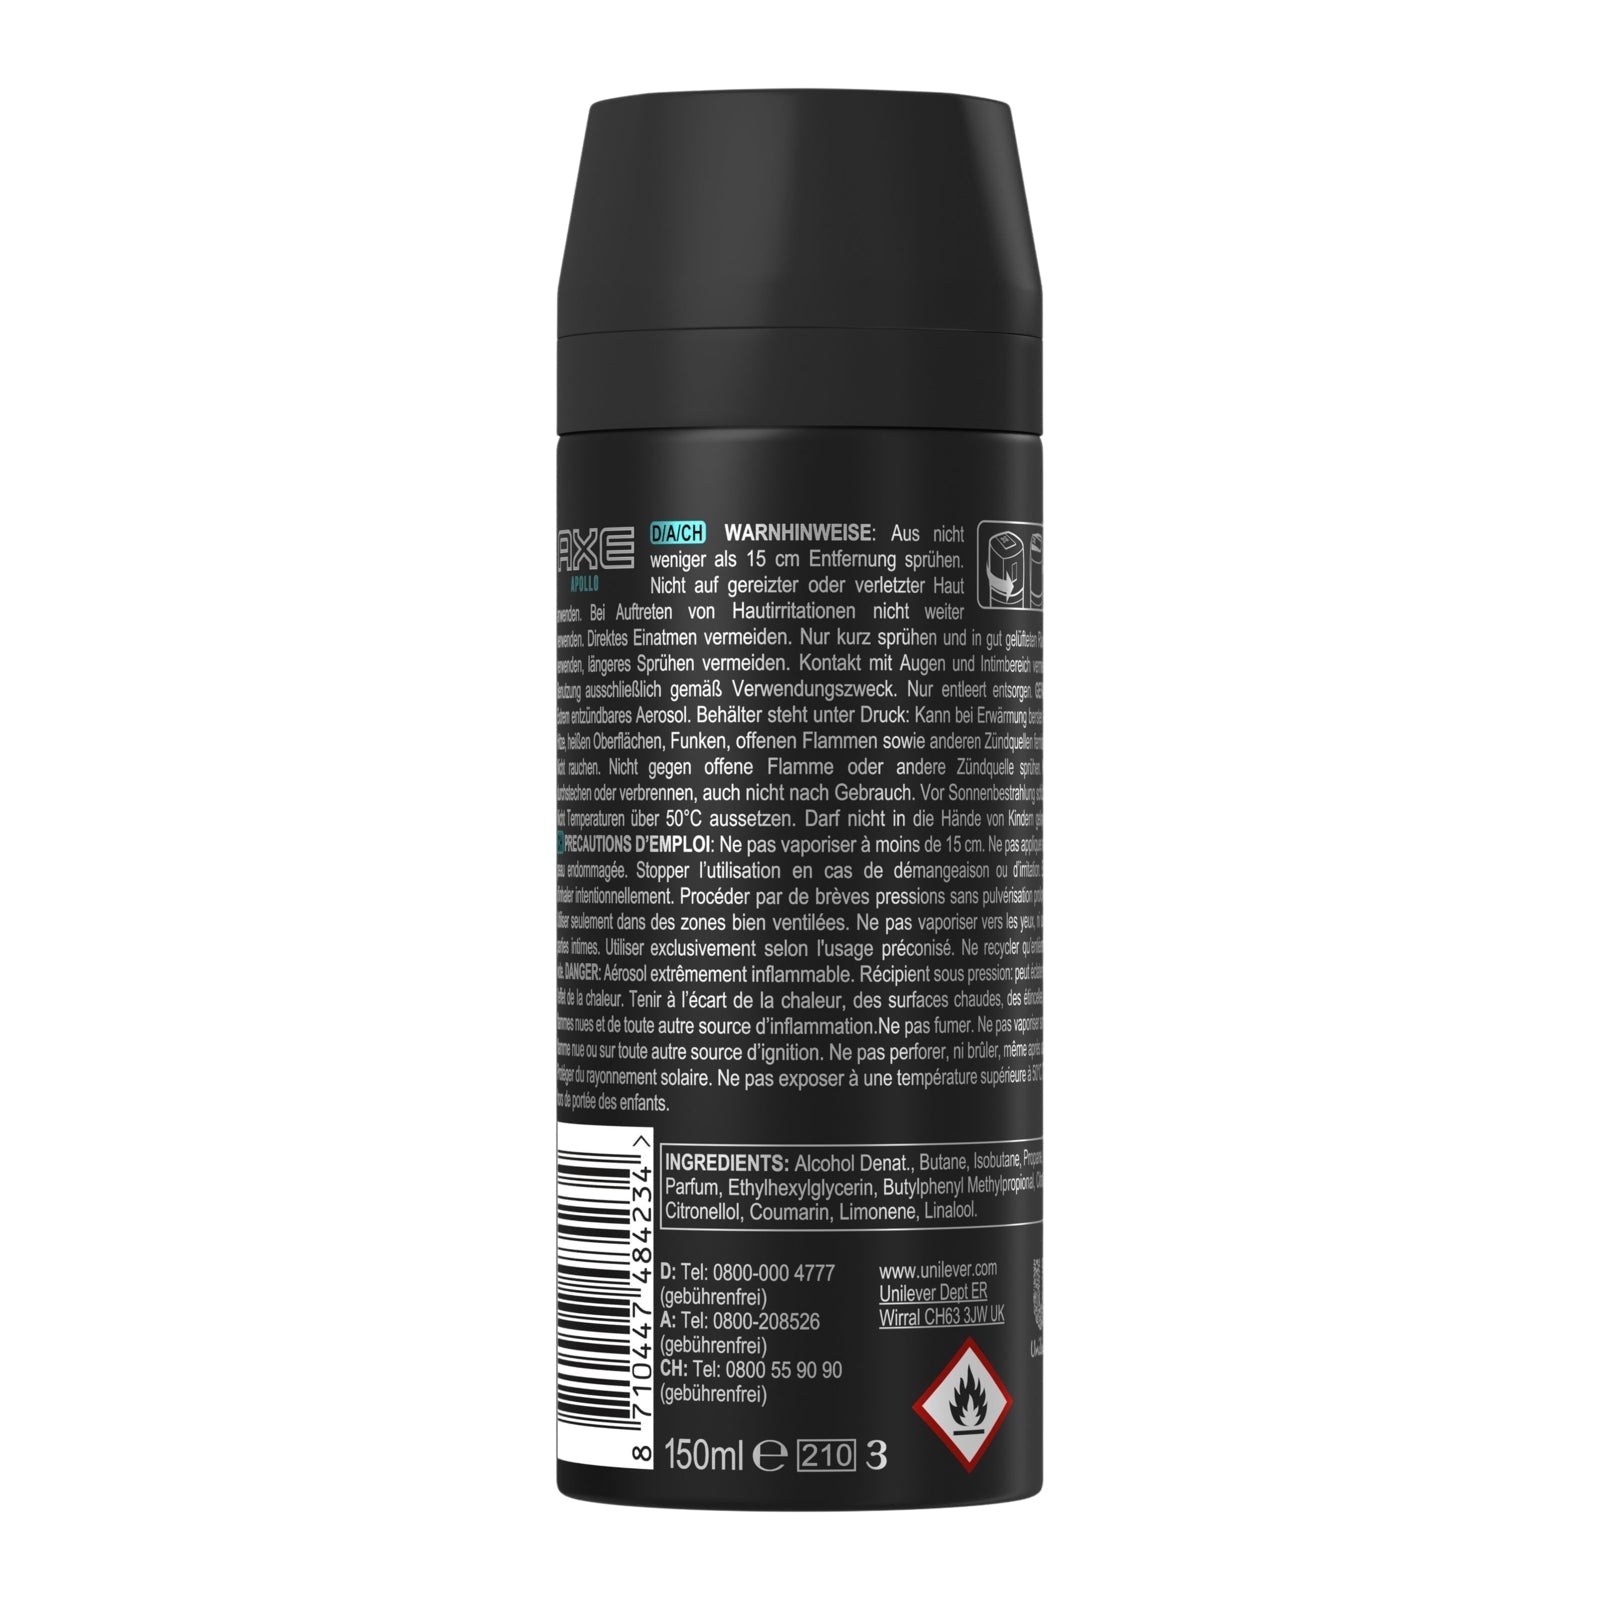 Bodyspray Apollo Deo ohne Aluminium 150ml